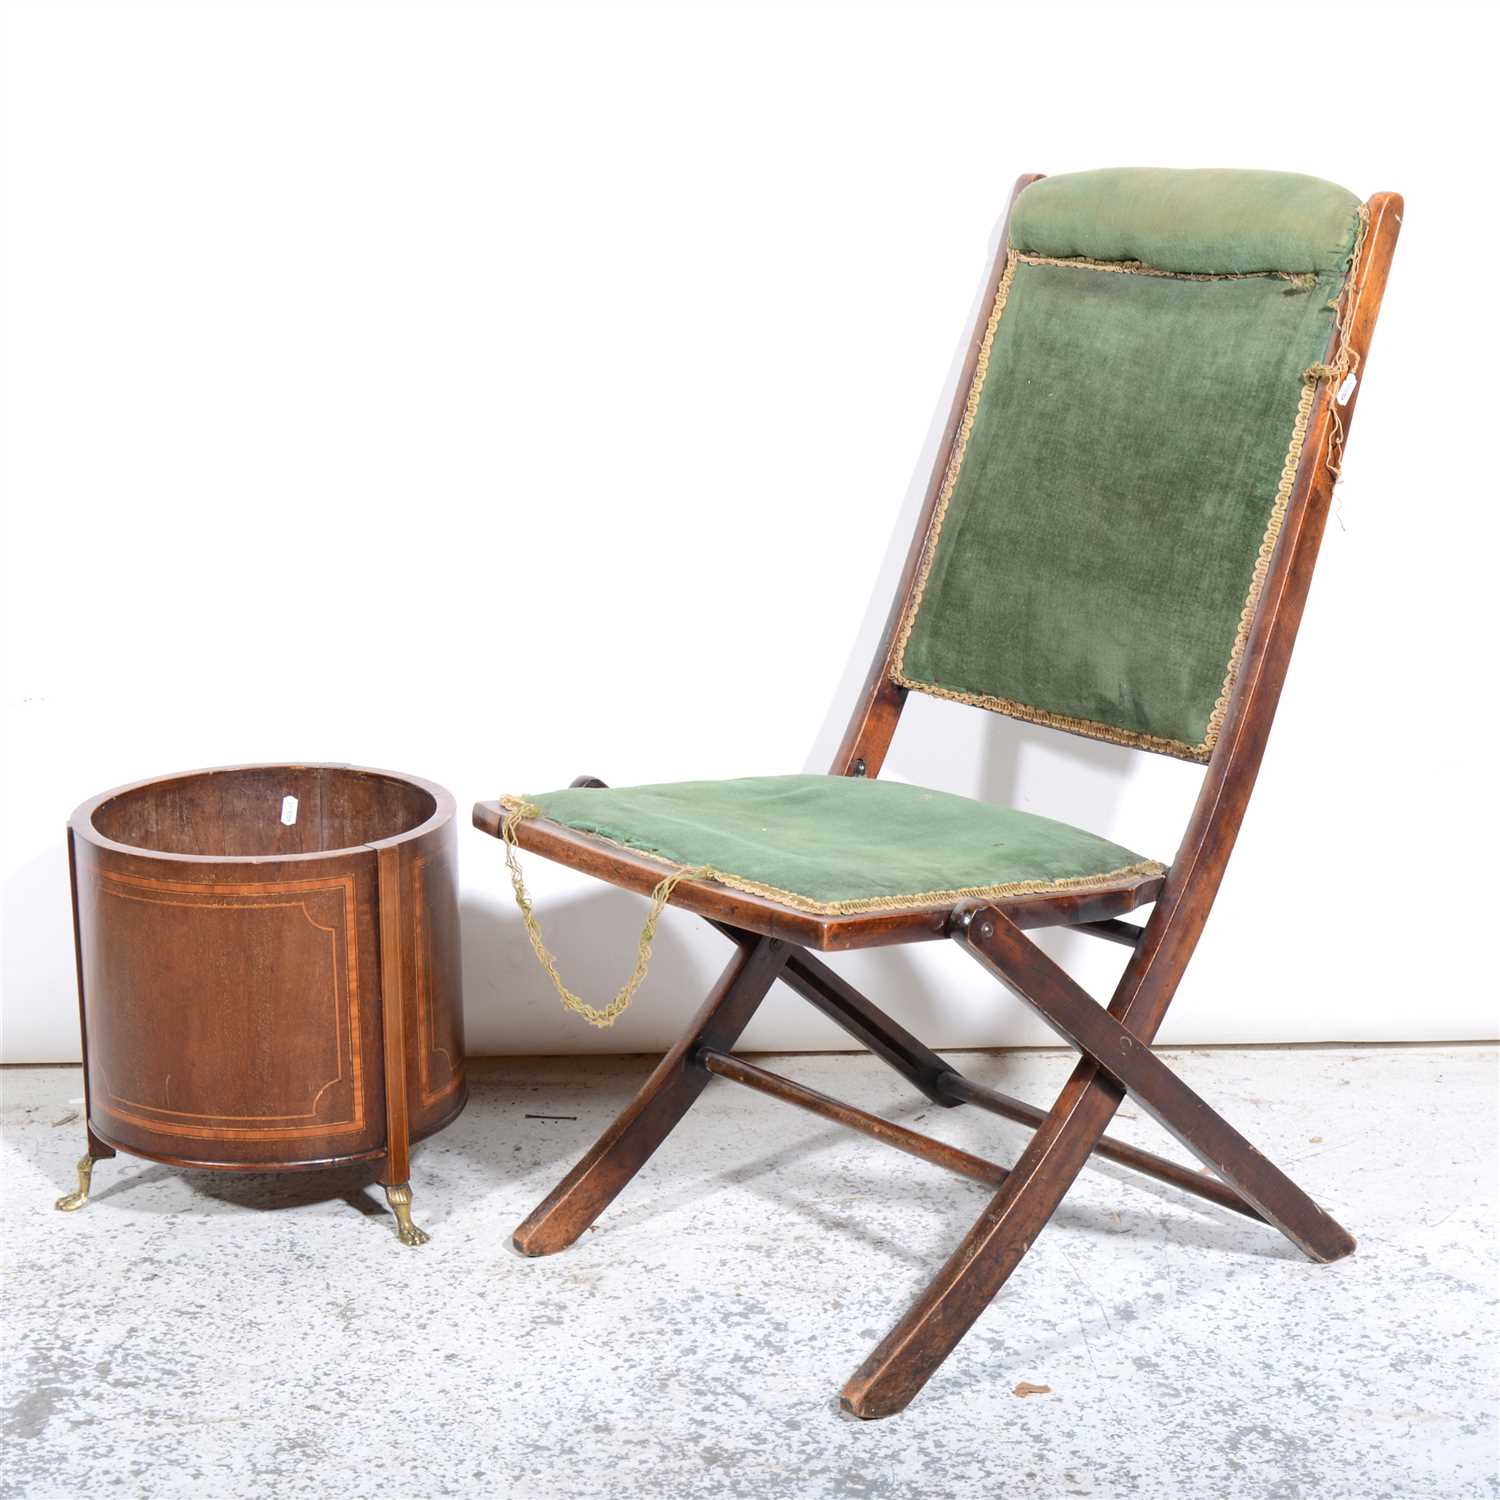 Lot 315 - Edwardian inlaid mahogany jardiniere, and an Edwardian folding chair